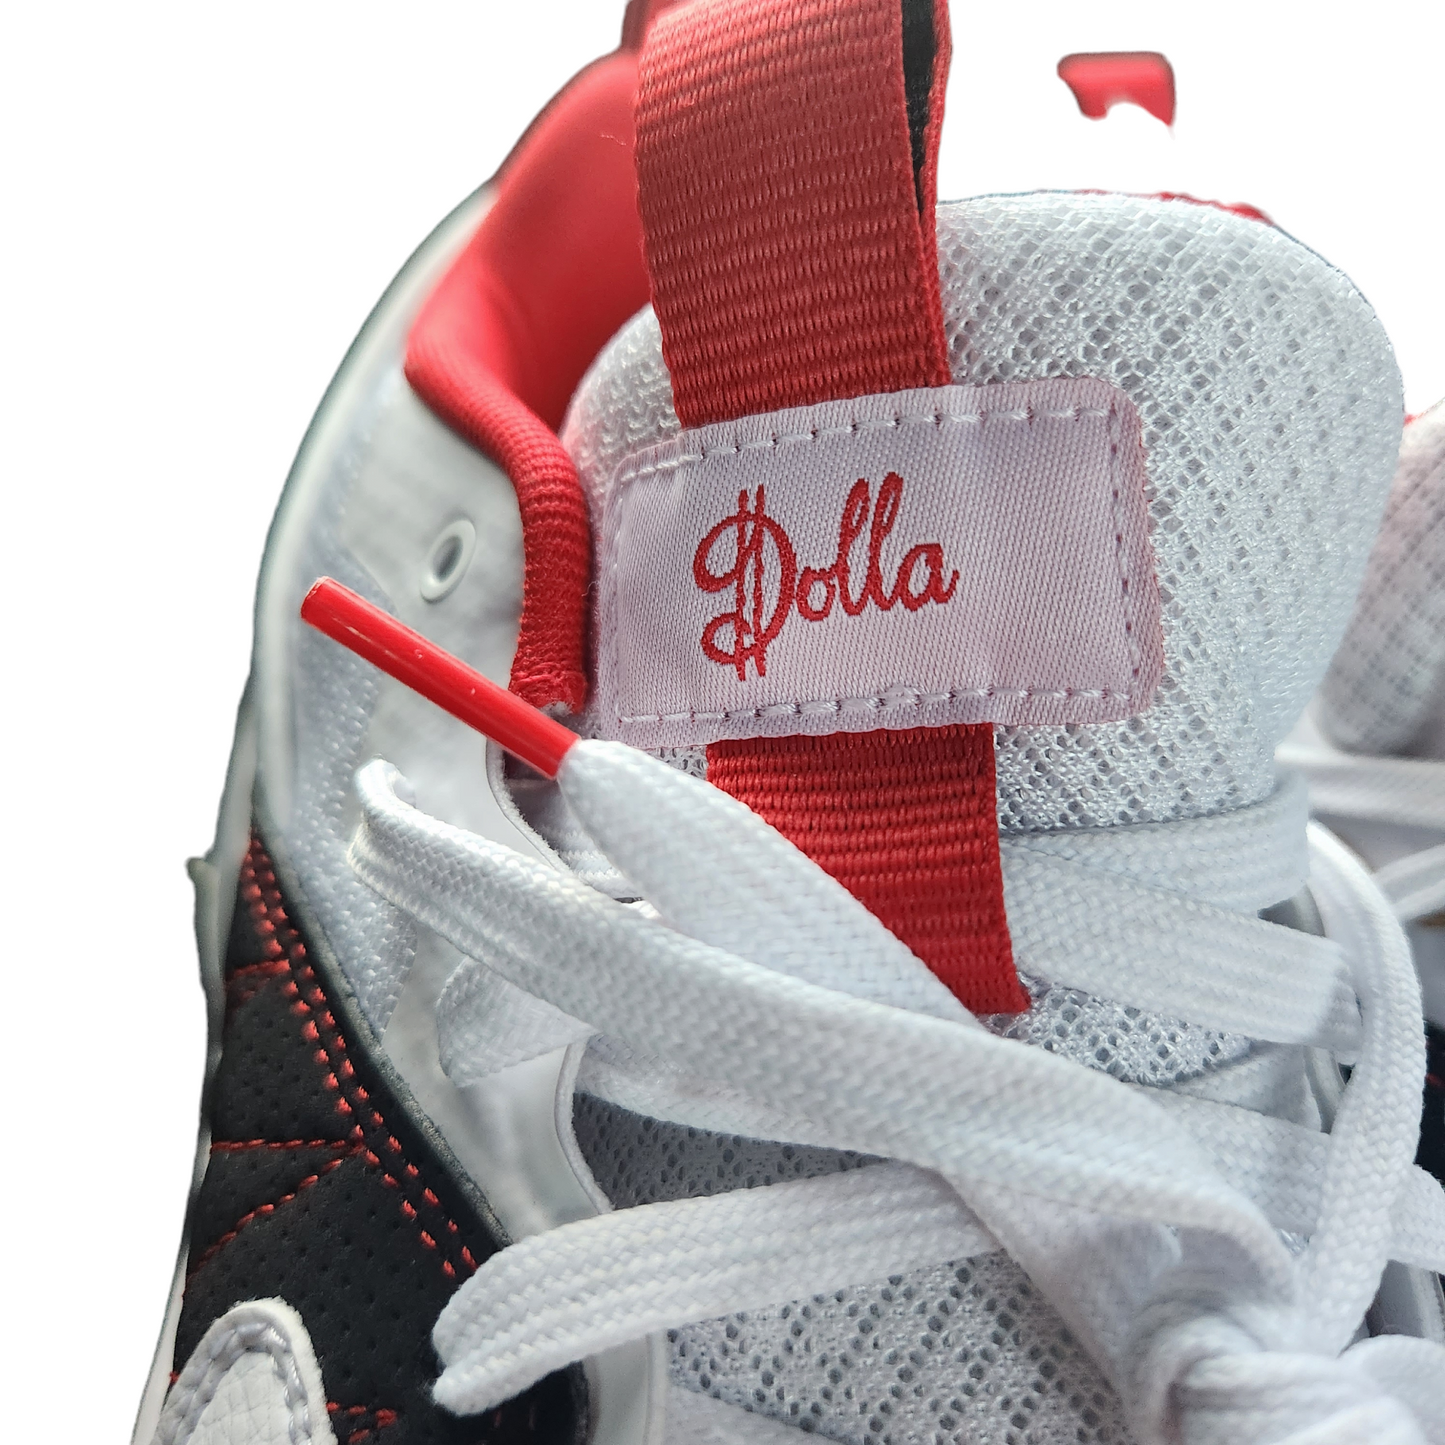 Adidas Damien Lillard "Dame Certified" Men's Basketball Shoes Red/White - Size 10.5